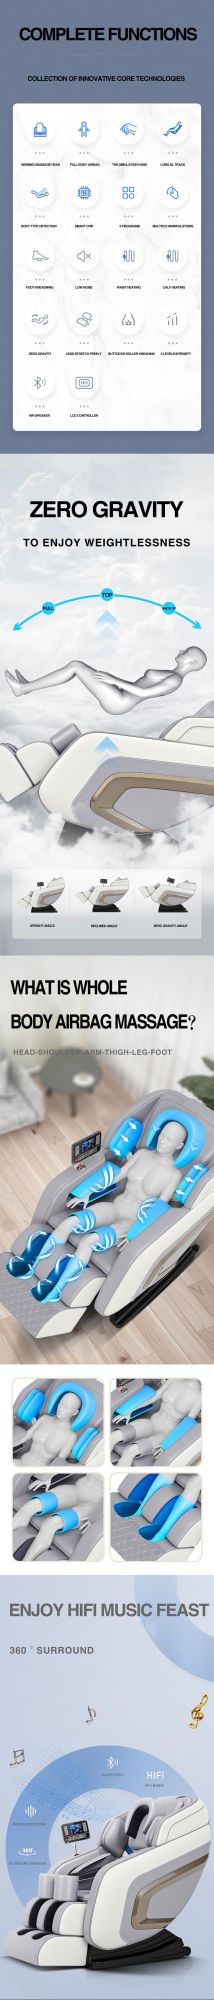 2021 New Style U Shape Pillow Electric Luxury Full Body Japanese Massage Chair Zero Gravity 3D Office Sofa Massage Chair